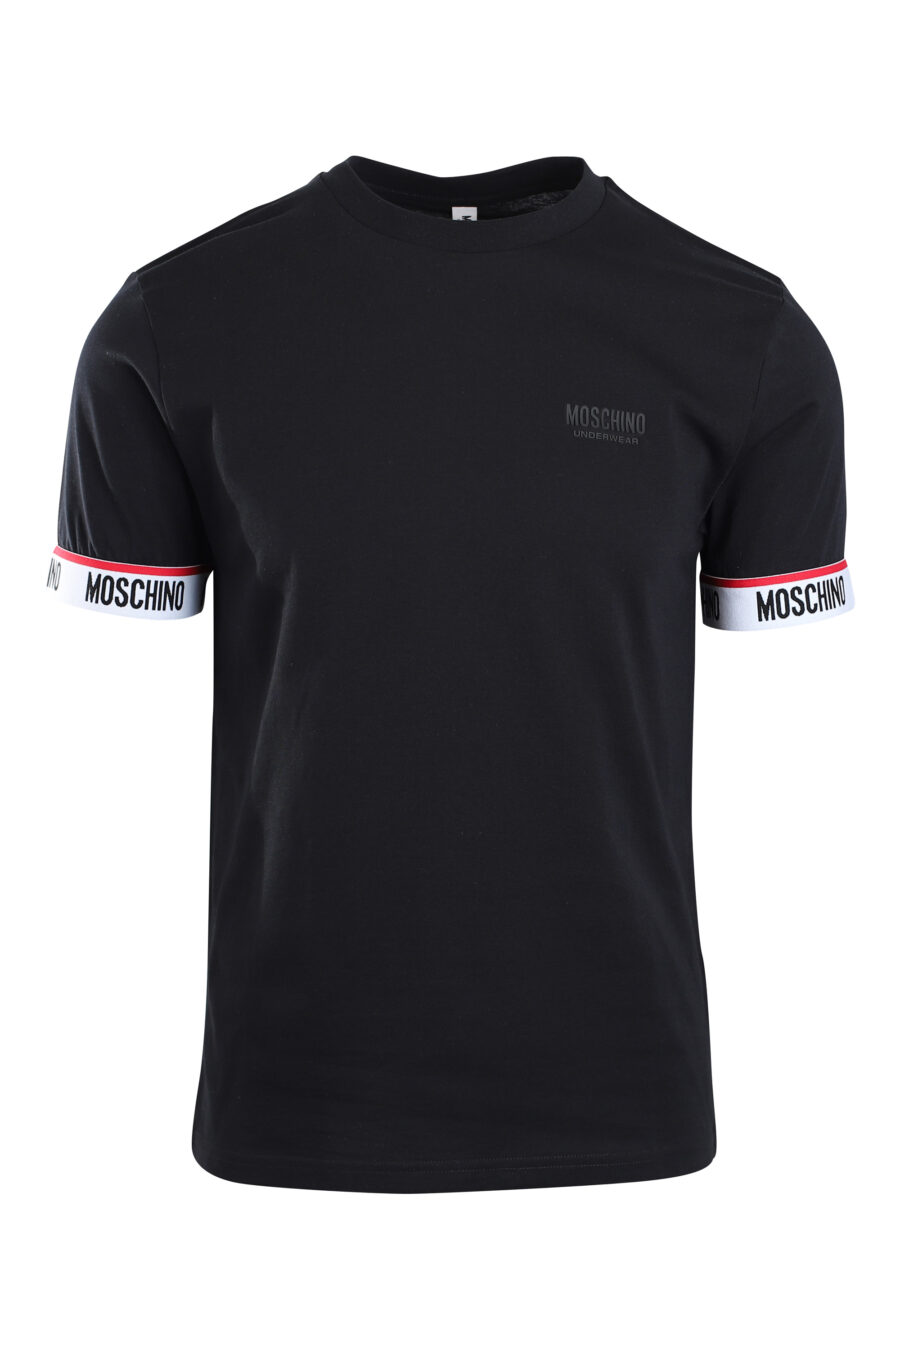 Black T-shirt with logo band on sleeves and monochrome mini-logo - IMG 2159